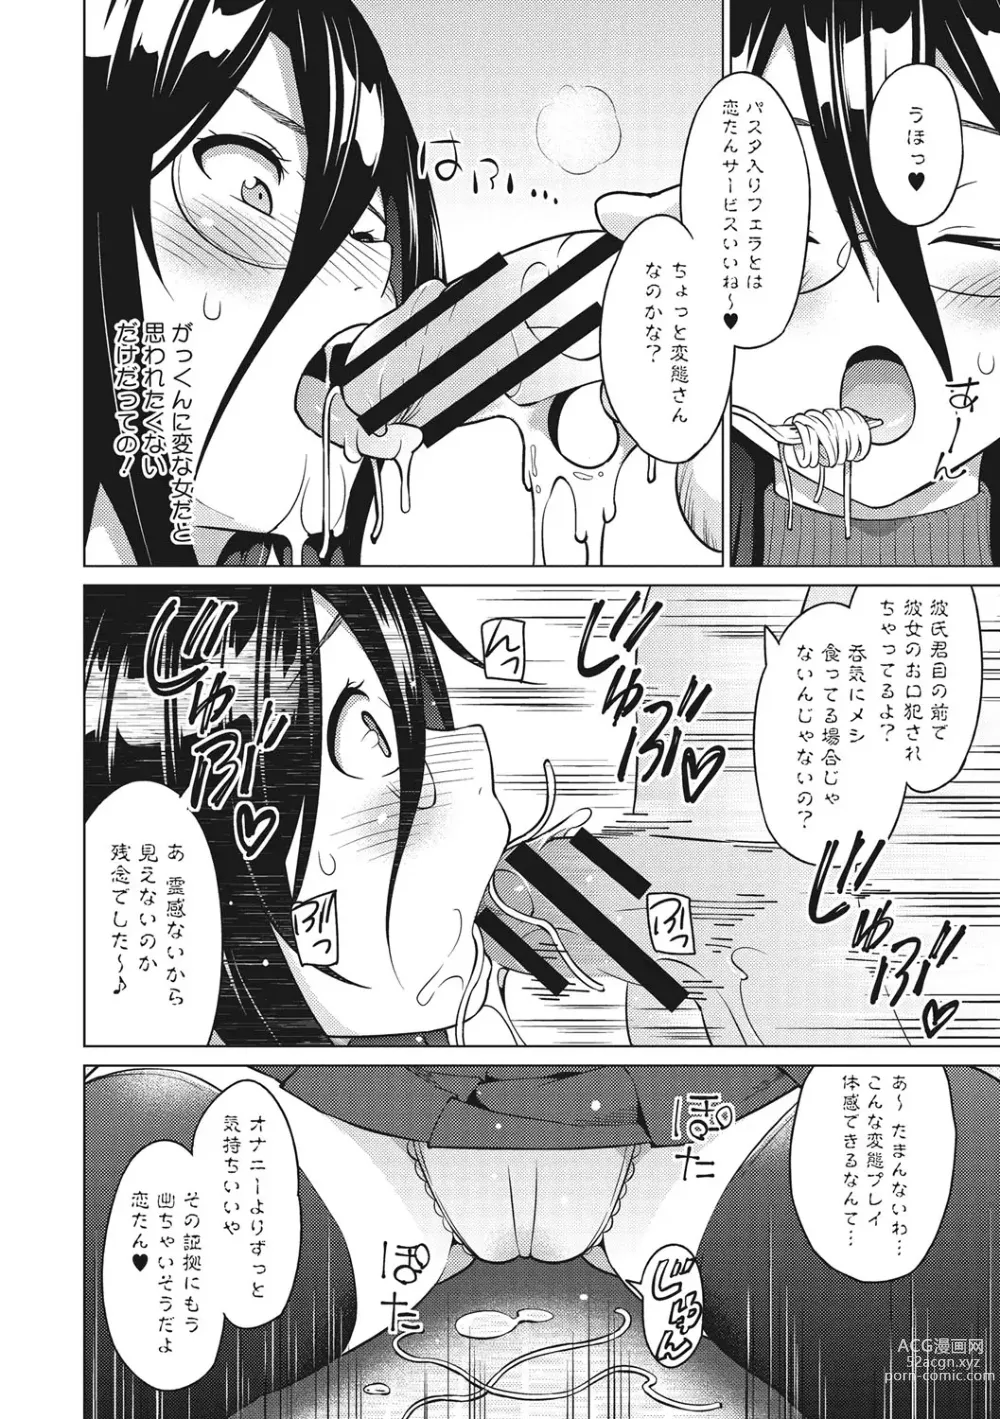 Page 9 of manga Risky Play